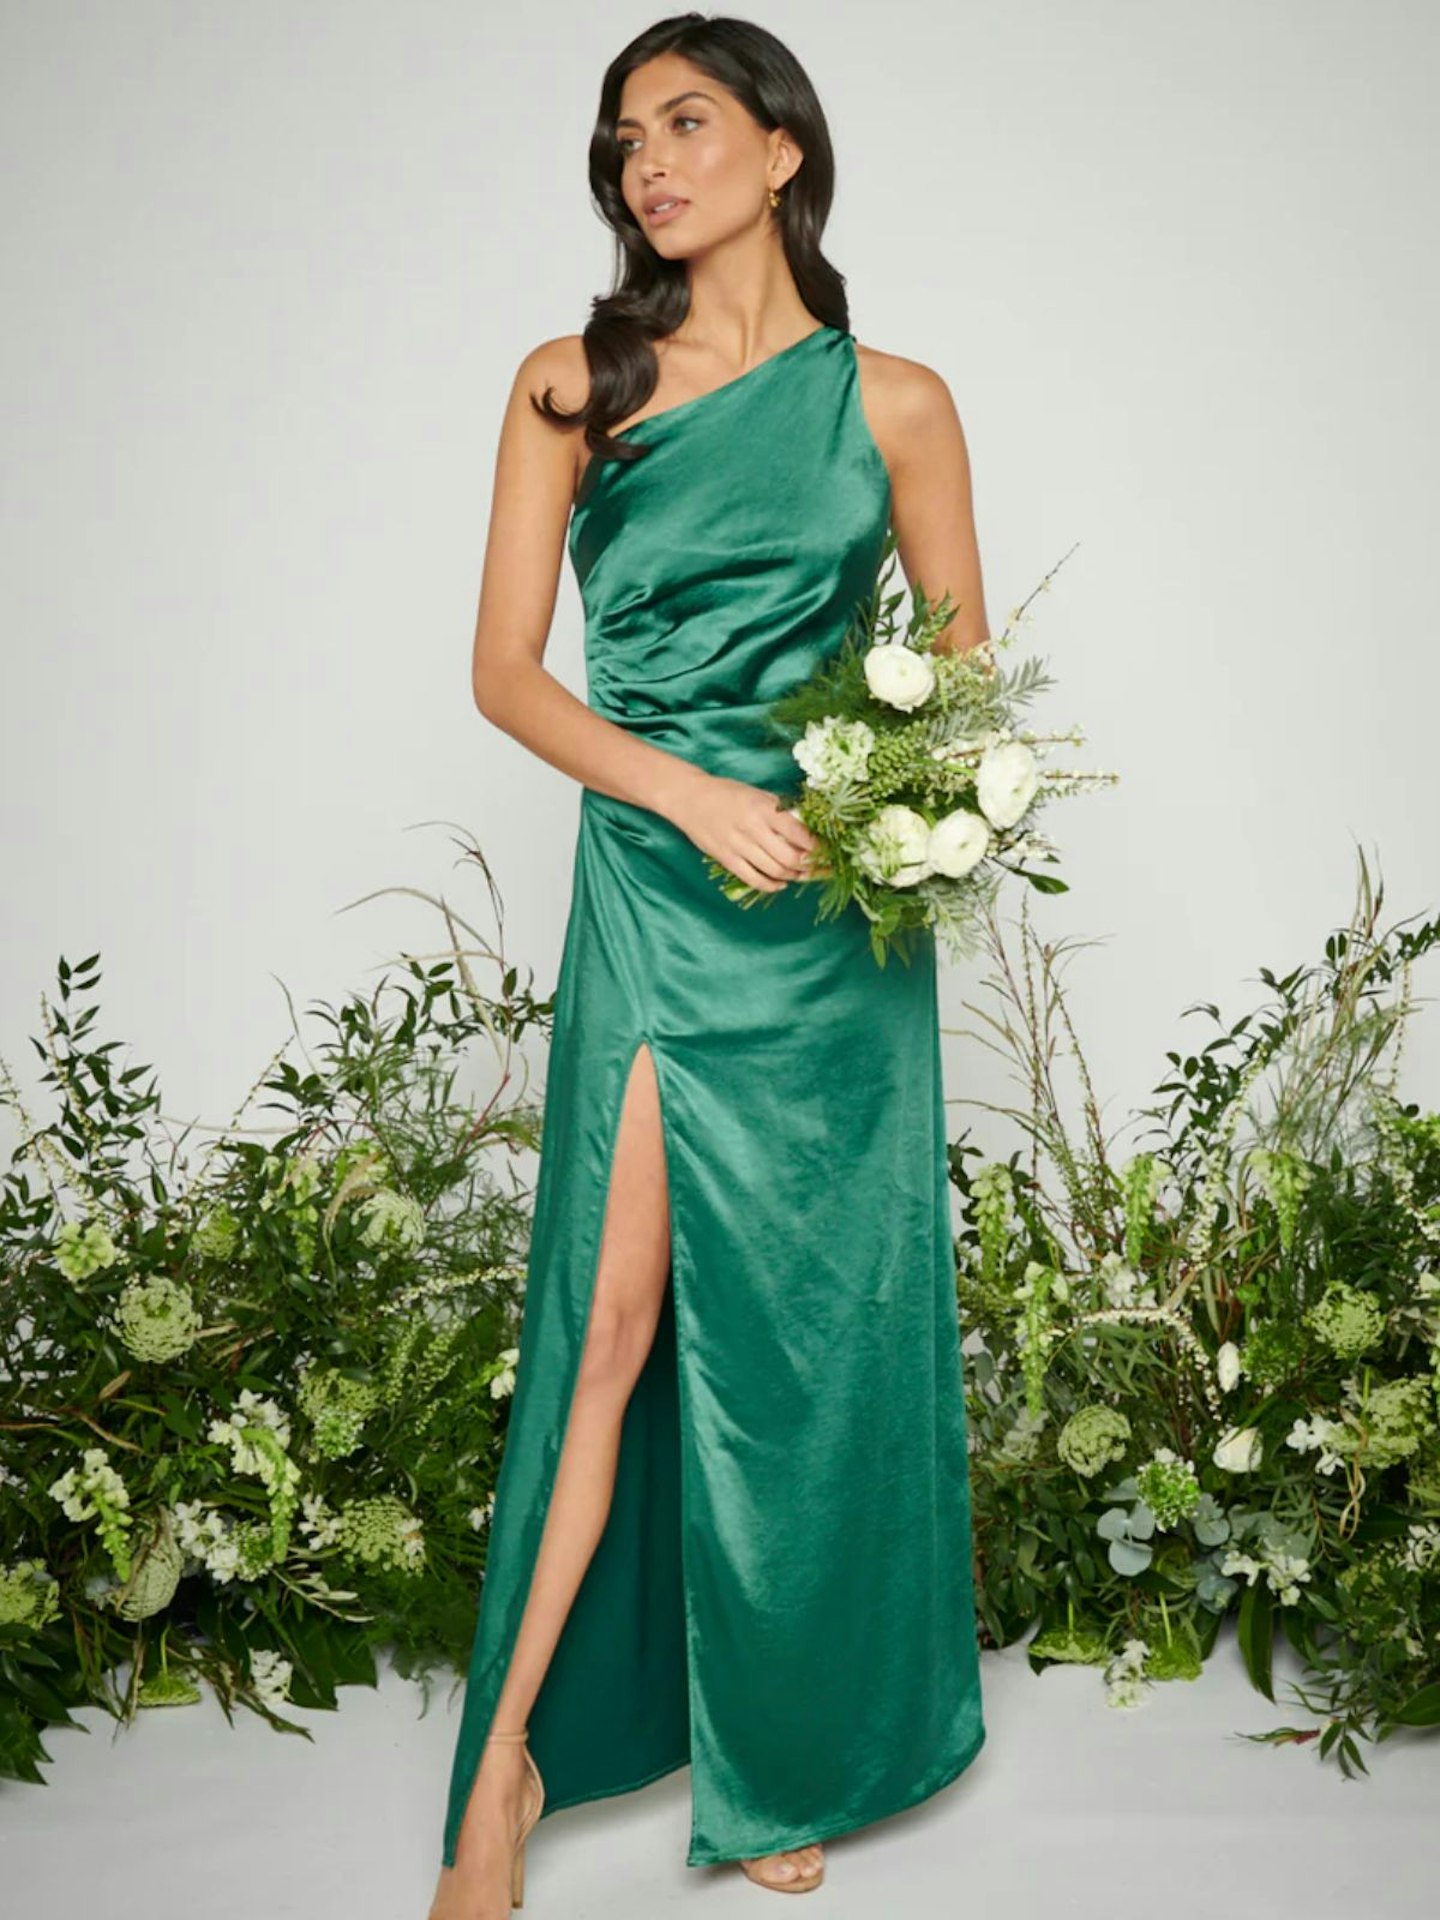 The Best Green Bridesmaid Dresses | Fashion | Grazia